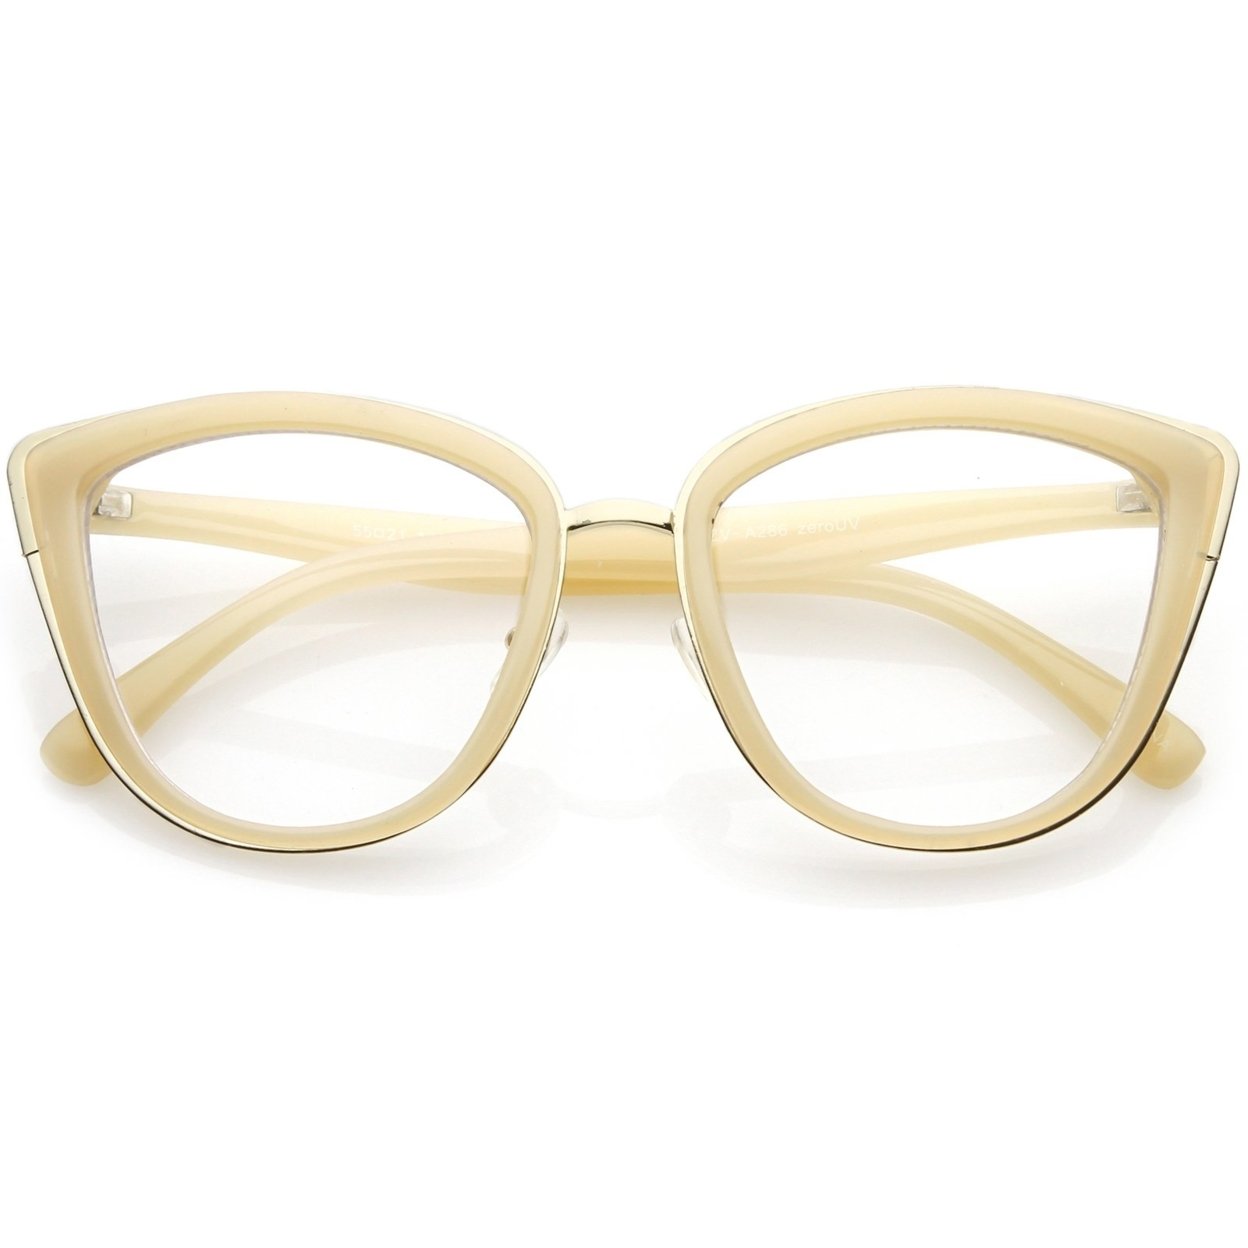 Oversize Rimmed Metal Cat Eye Glasses Clear Lens 55mm - Creme Gold / Clear